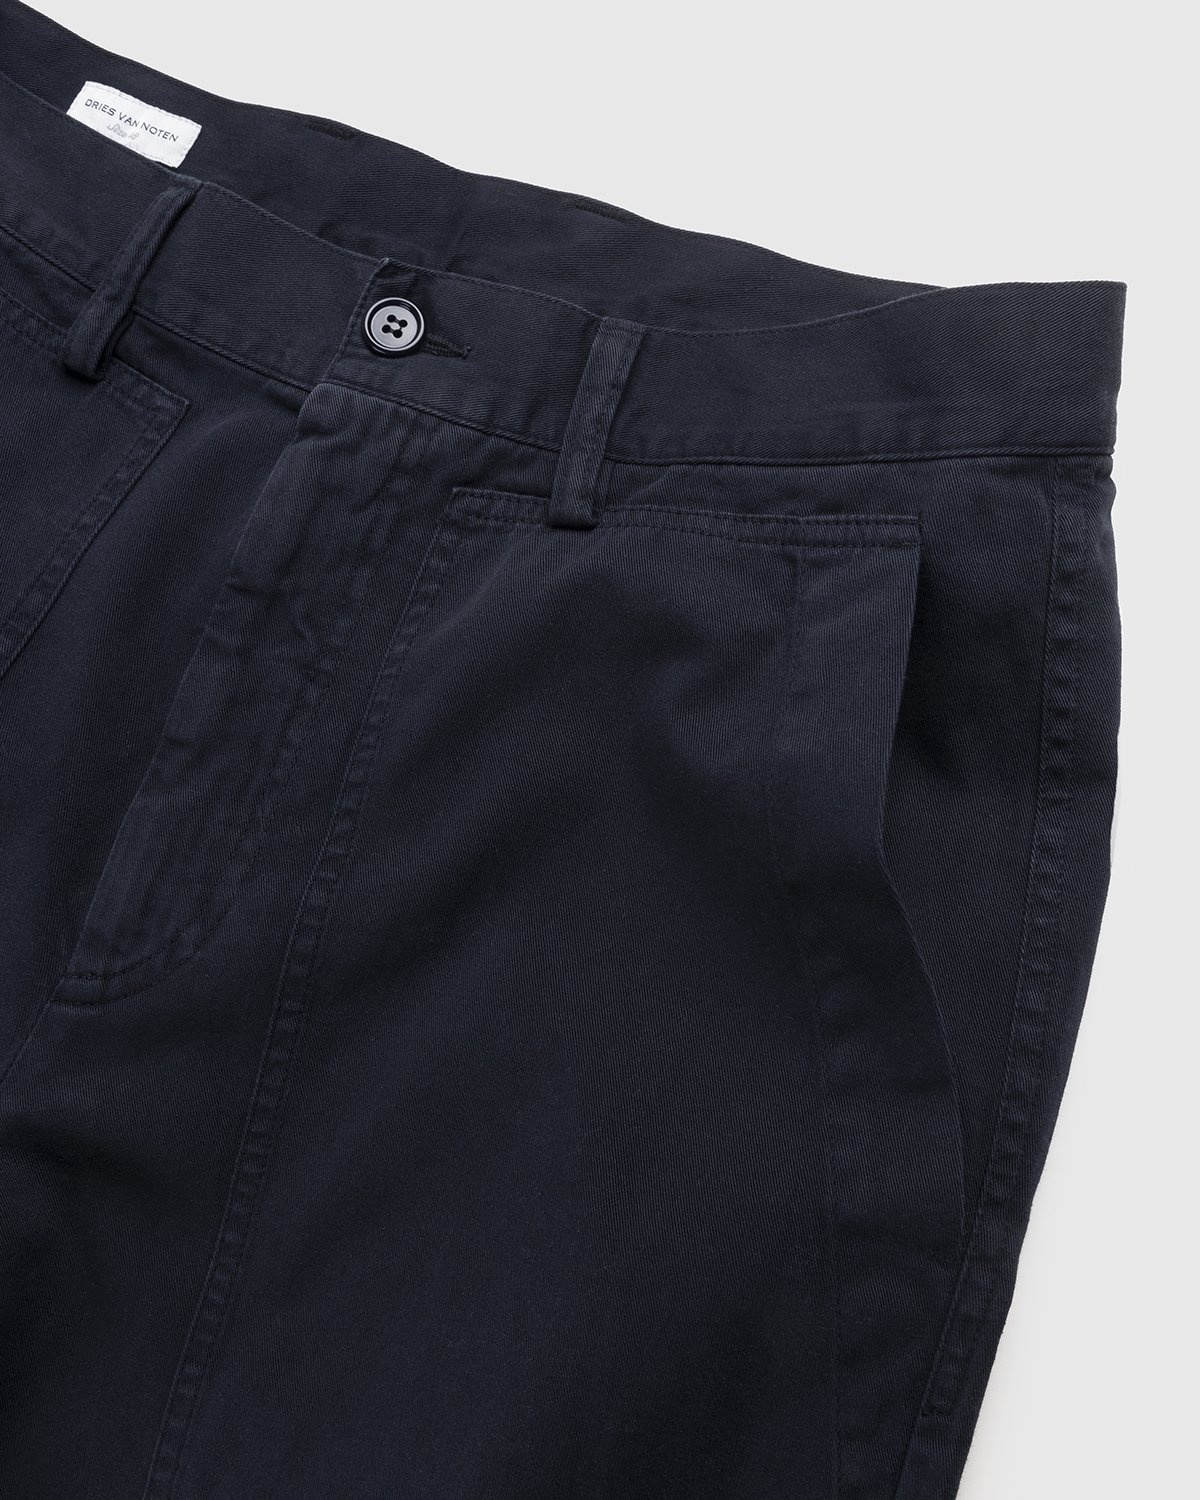 Dries van Noten – Pilson Pants Navy - Pants - Blue - Image 4